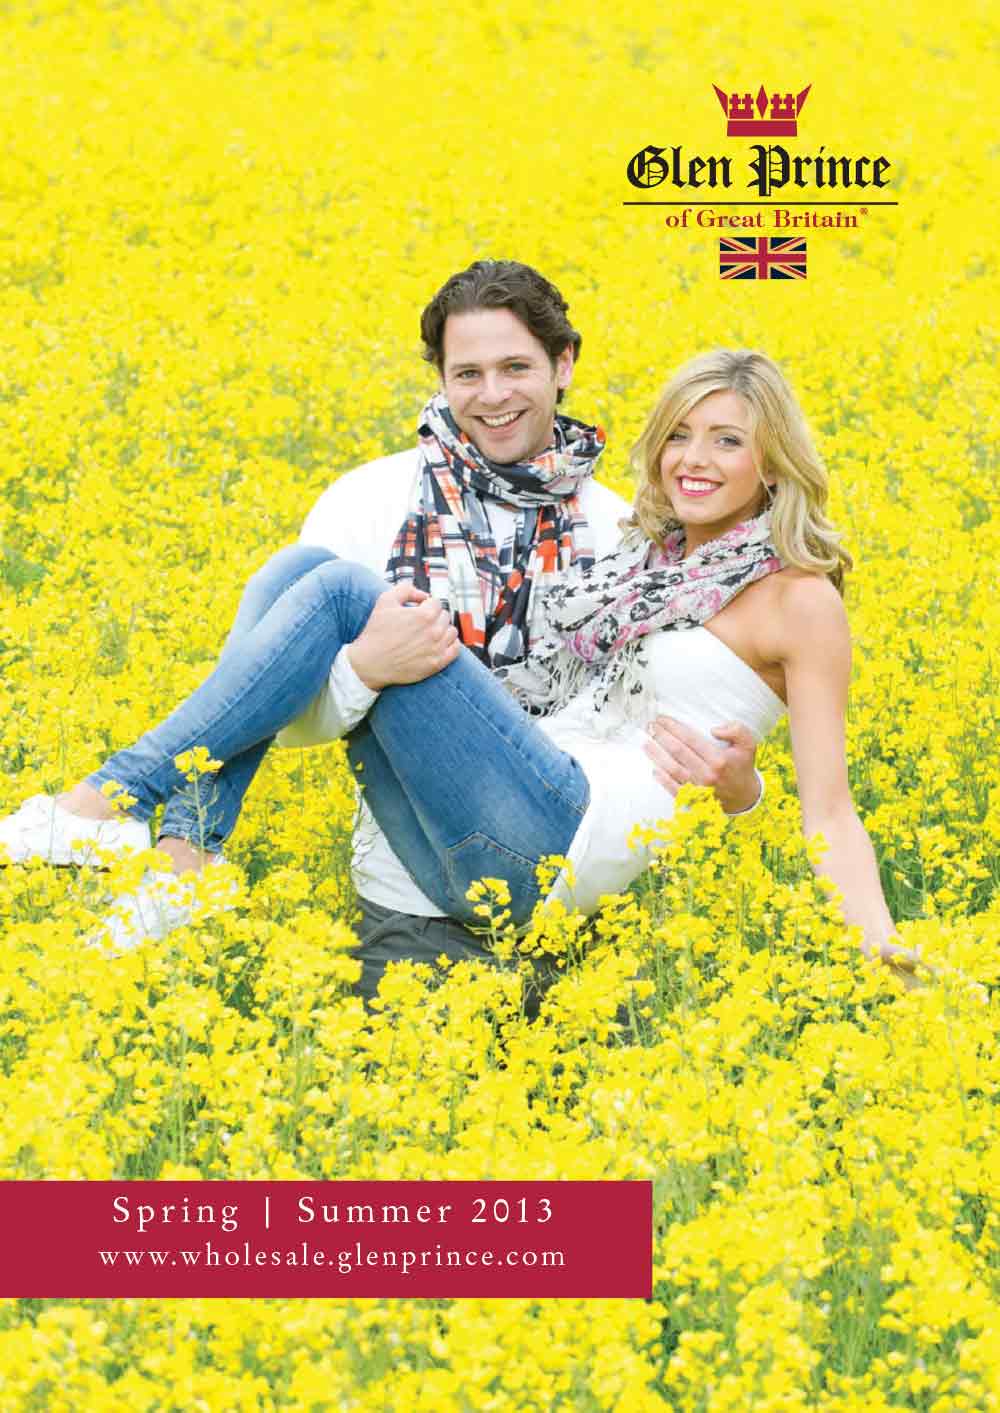 Glen Prince of Great Britain Spring/ Summer 2013 brochure